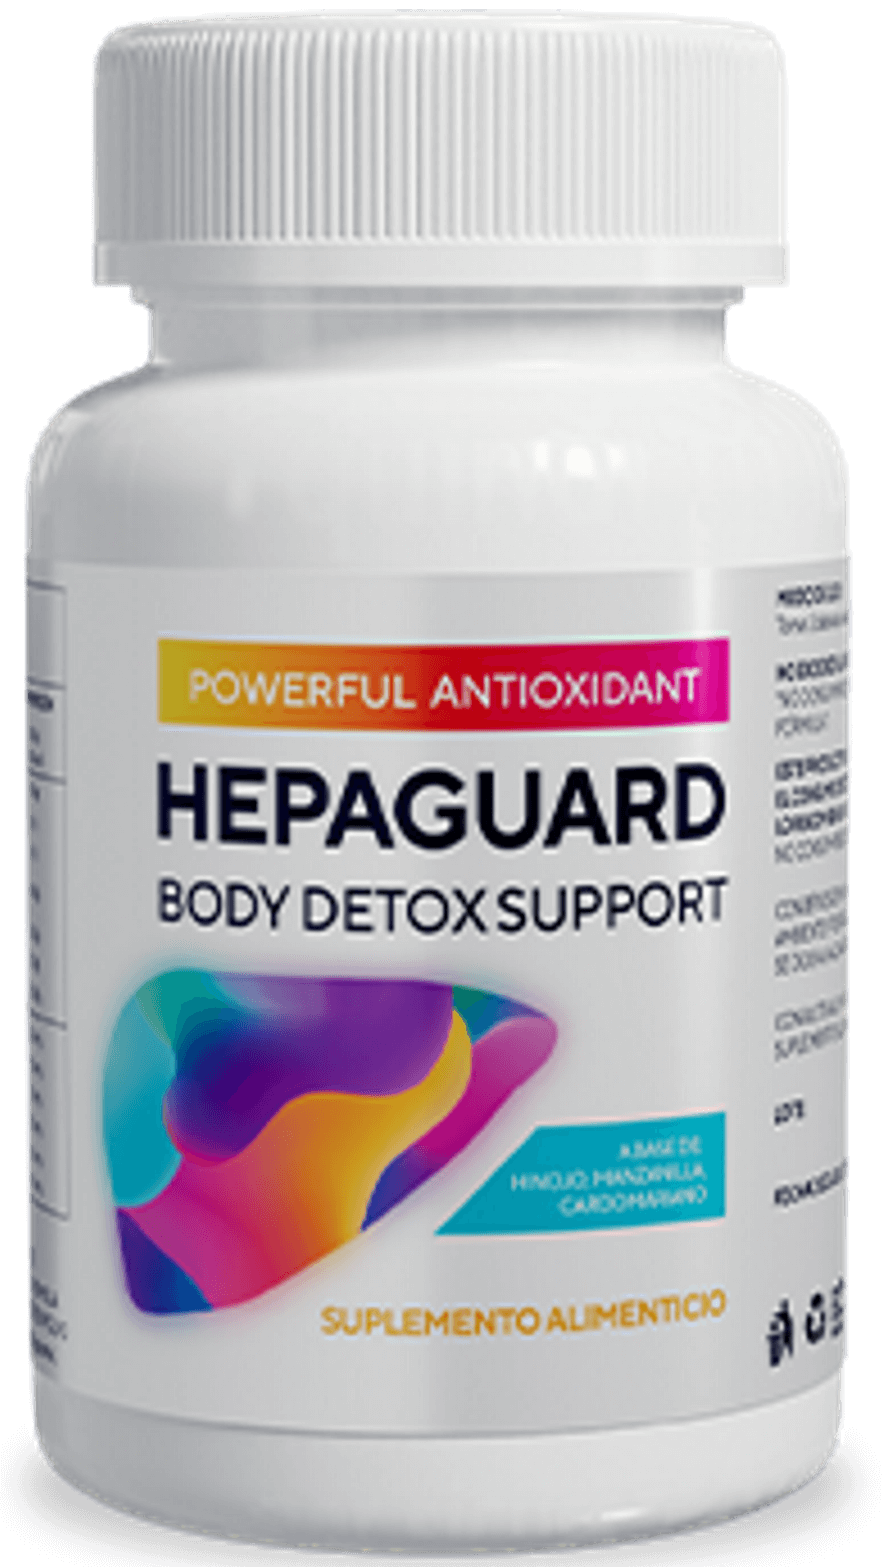 Hepaguard